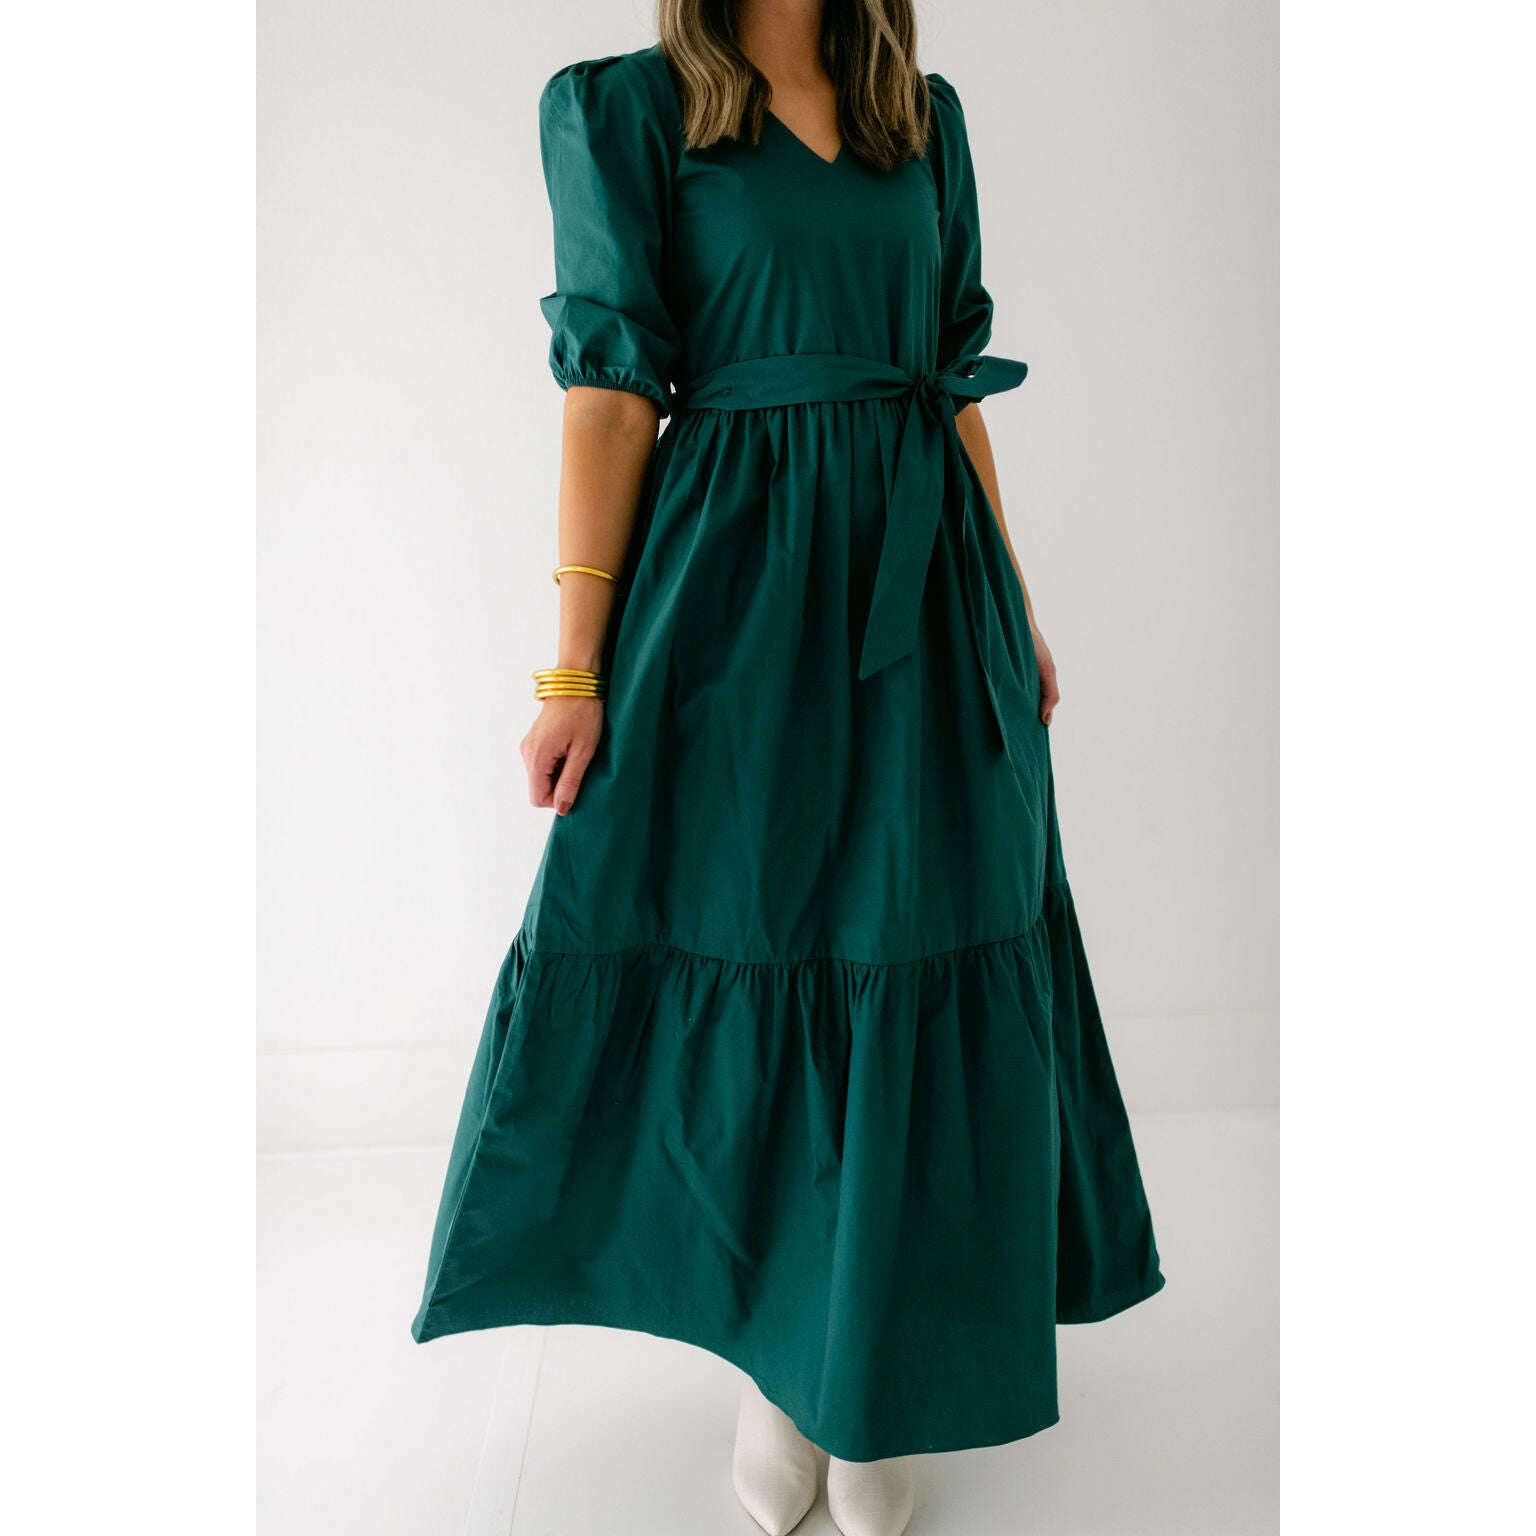 8.28 Boutique:Maude Vivante,Maude Vivante Melina Forest Dress,dresses